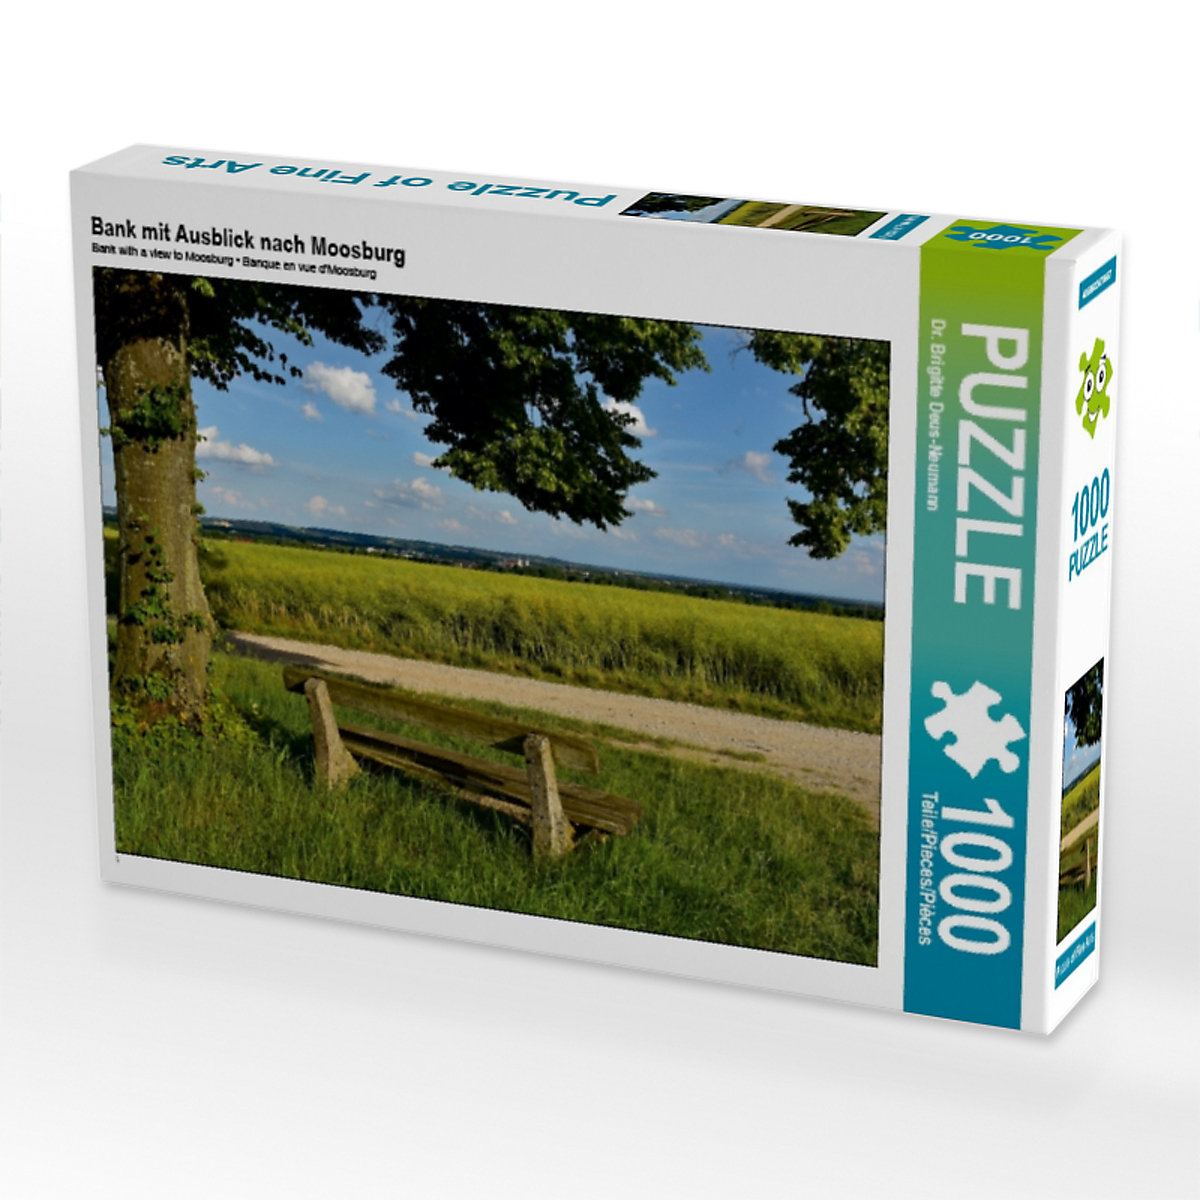 CALVENDO® Puzzle CALVENDO Puzzle Bank mit Ausblick nach Moosburg 1000 Teile Foto-Puzzle für glückliche Stunden